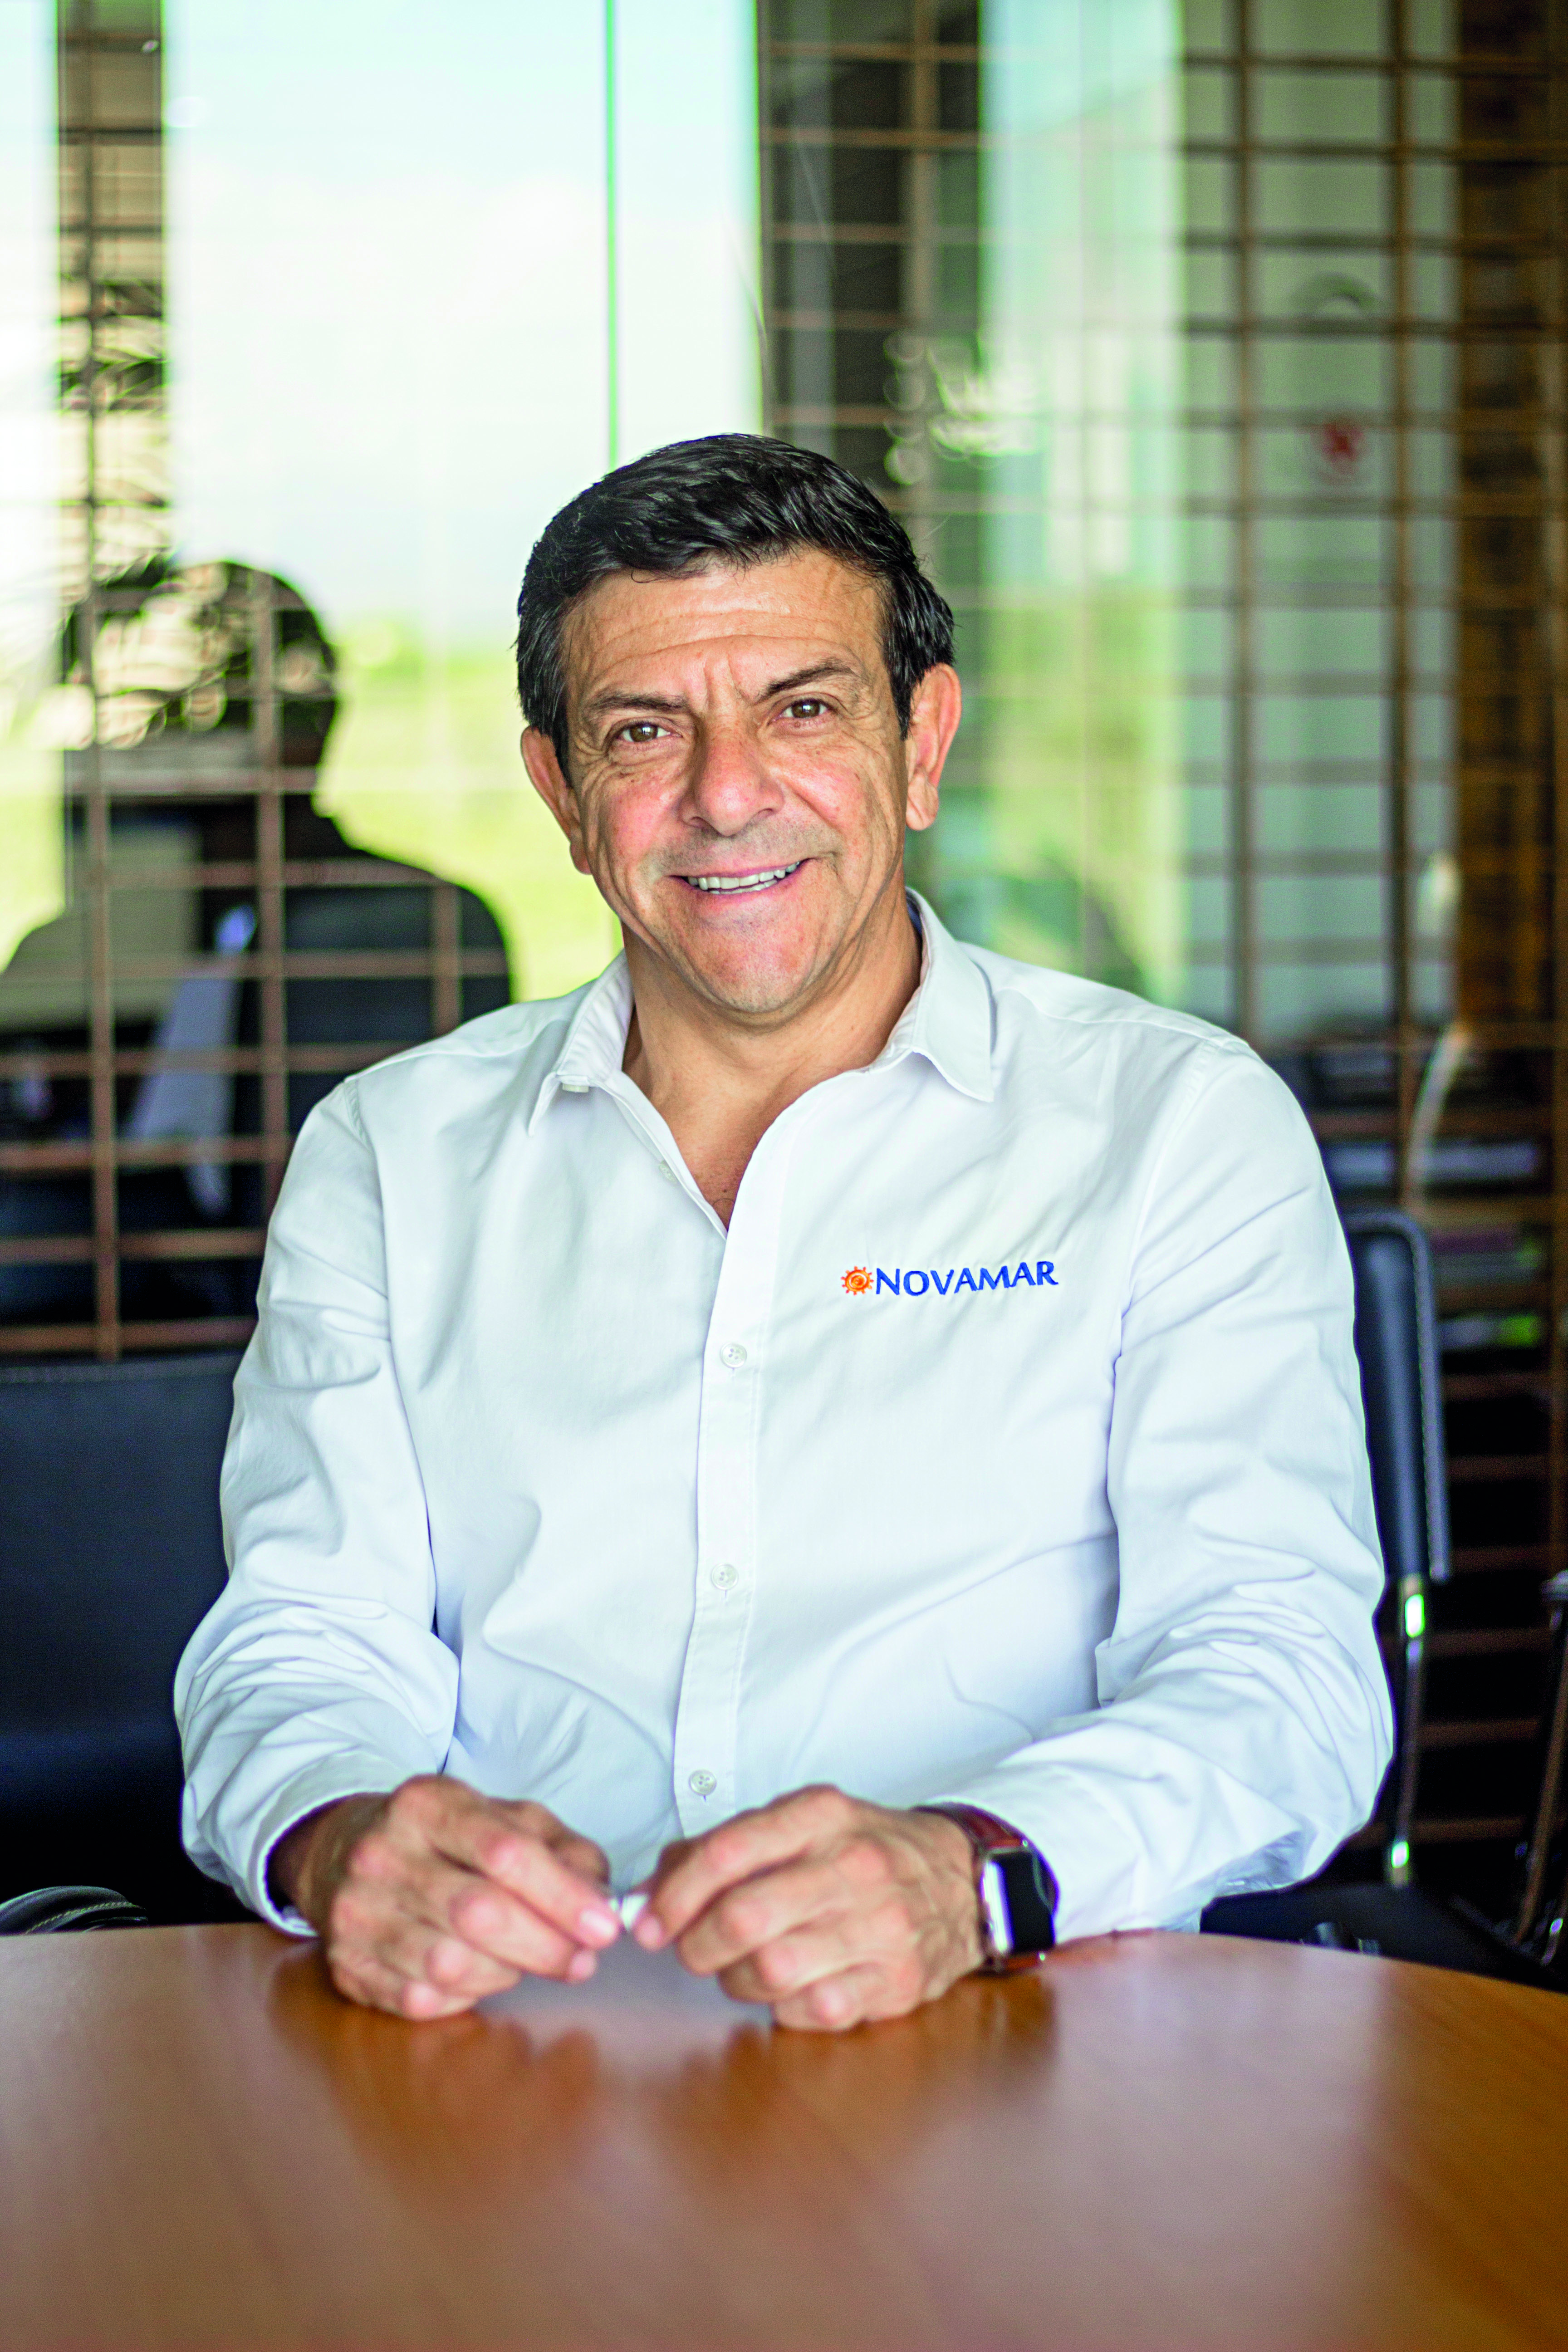 Roberto Castellanos Omaña, international general director of Novamar Insurance Mexico